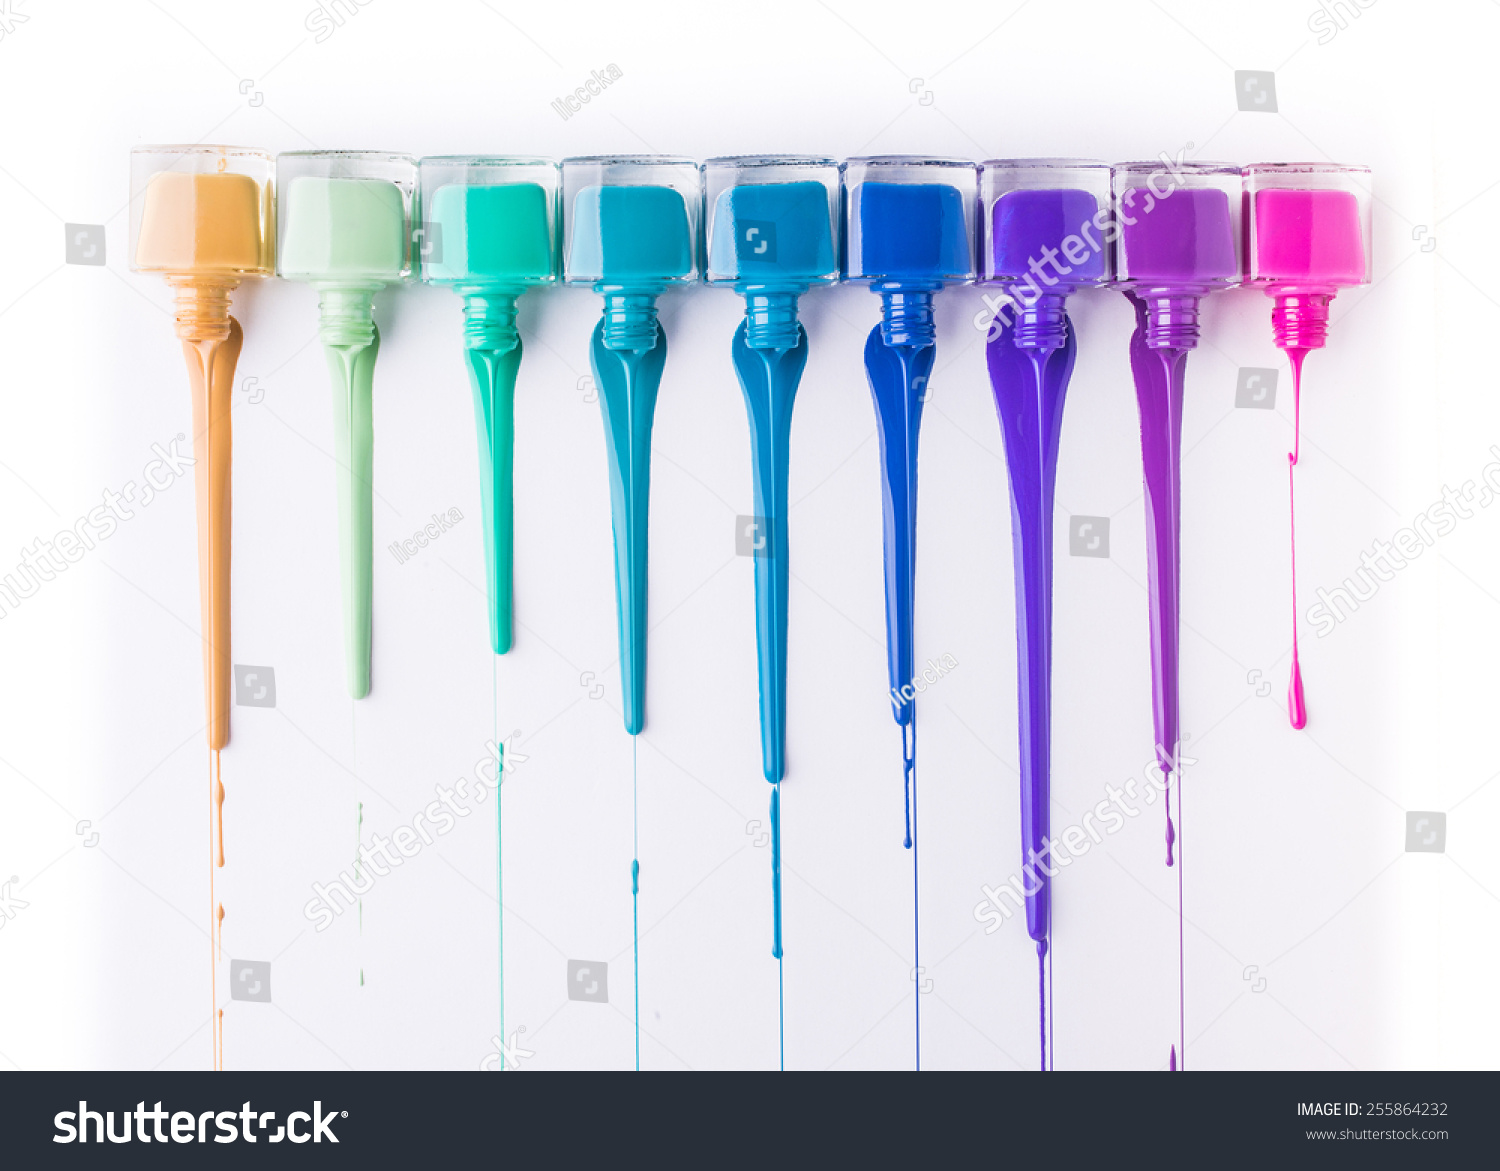 rainbow of nail polish isolated on a white background #255864232